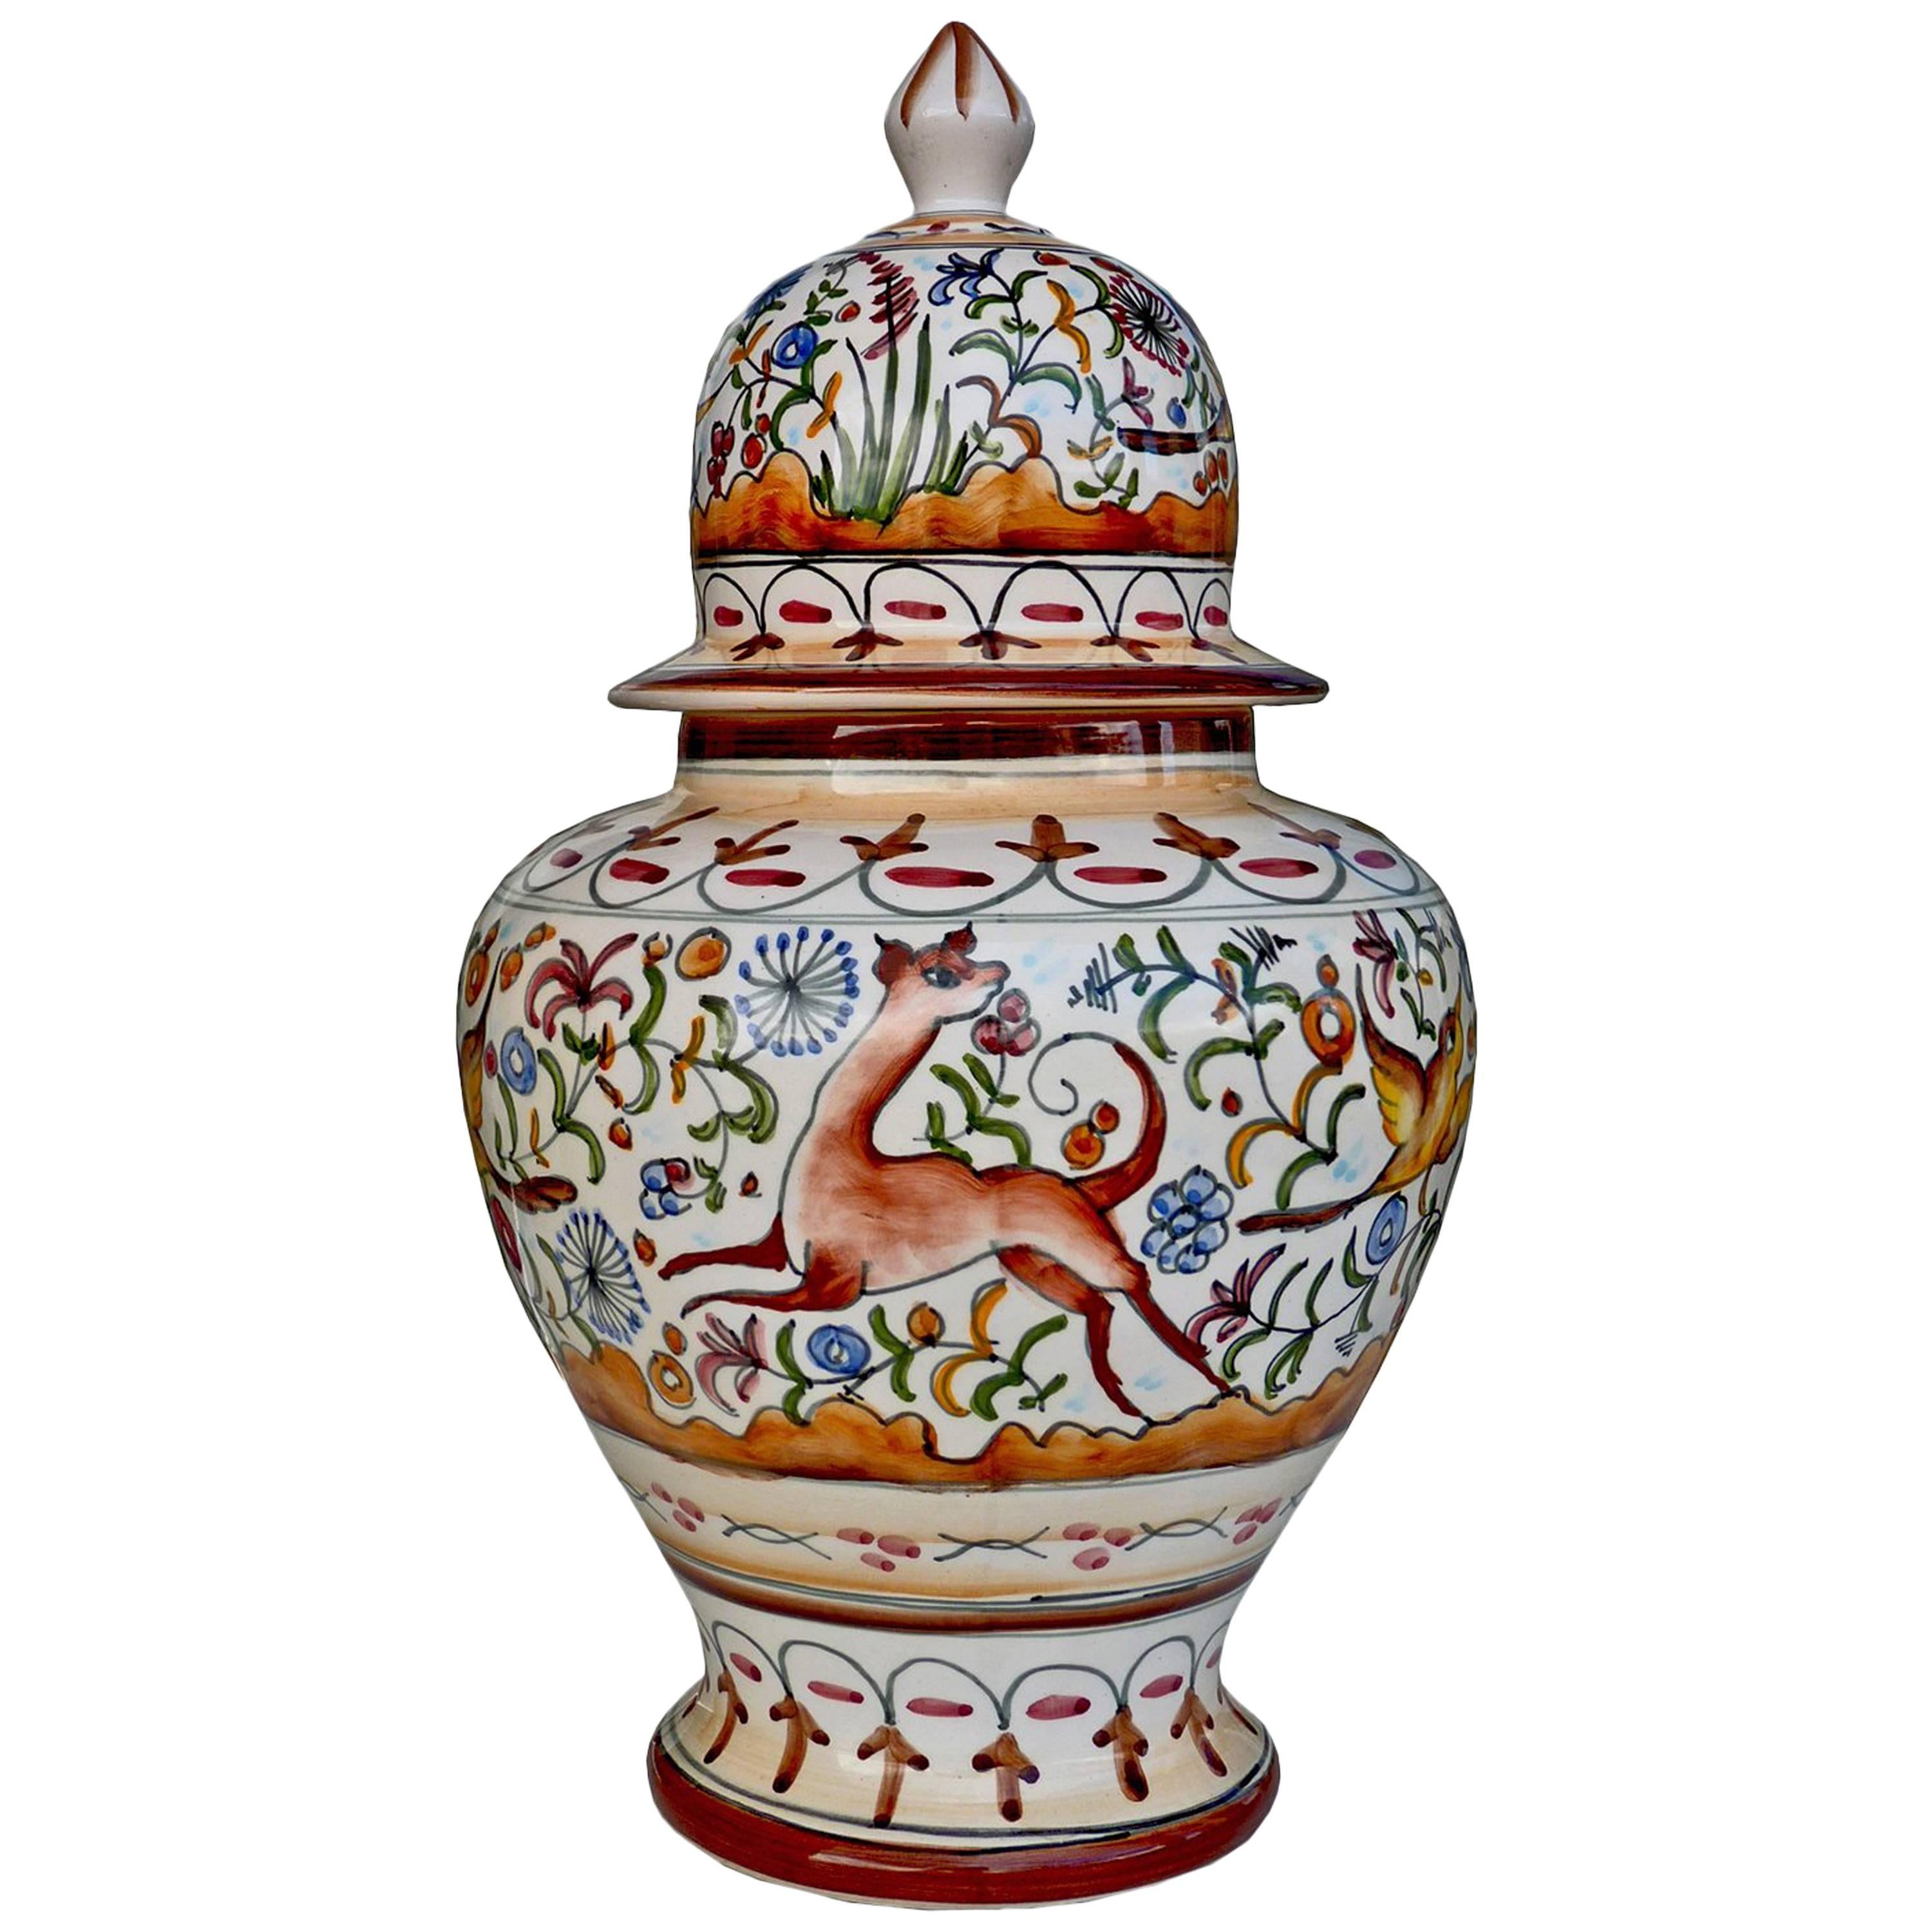 Antique Delft Polychrome Hand-Painted 17th Century Portuguese Ceramic Urn Vase